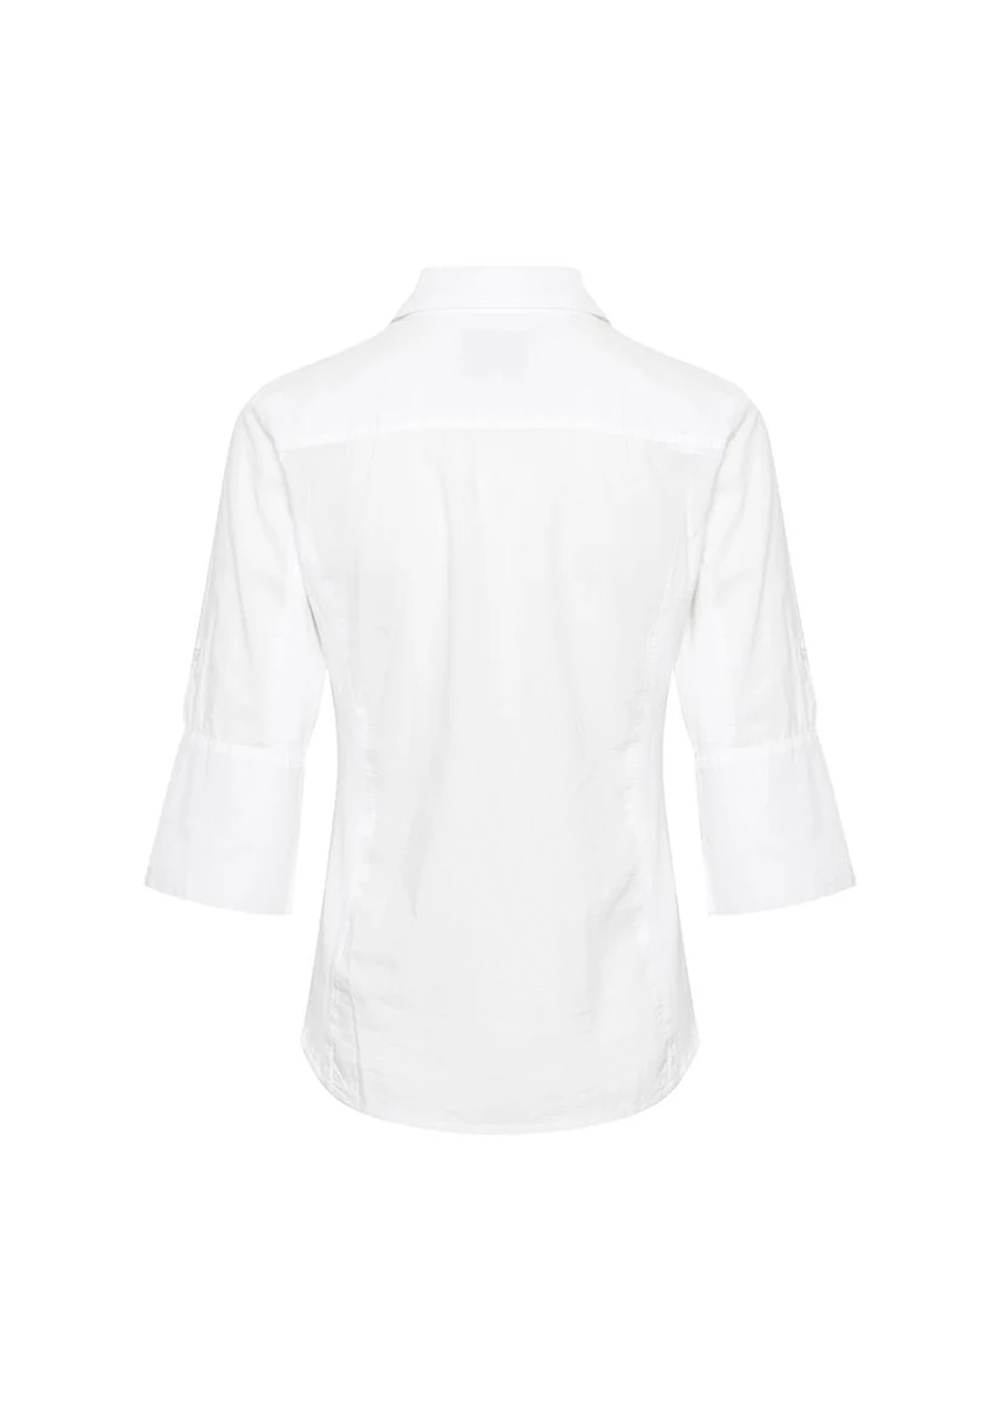 Cortnia Shirt - White - Part Two - Danali - Canada